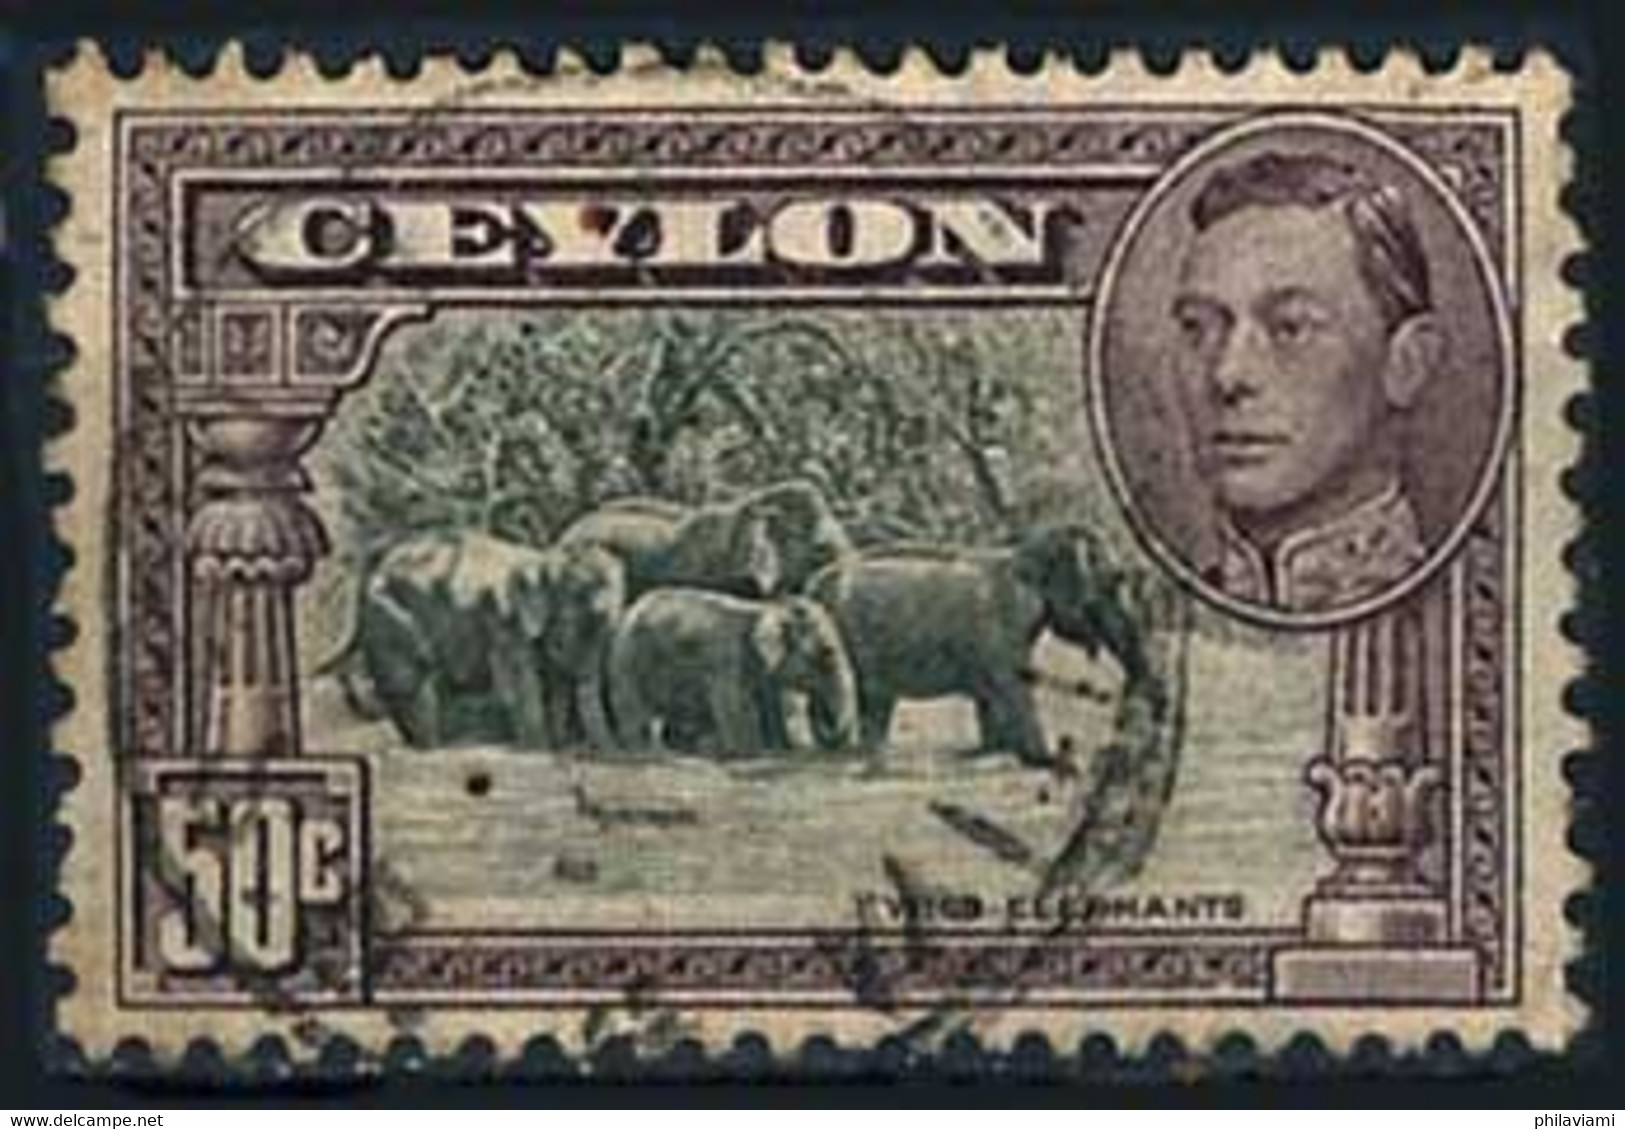 Ceylan Ceylon 1937 Eléphants Elefant  (Yvert 260, Michel 239) - Vleermuizen